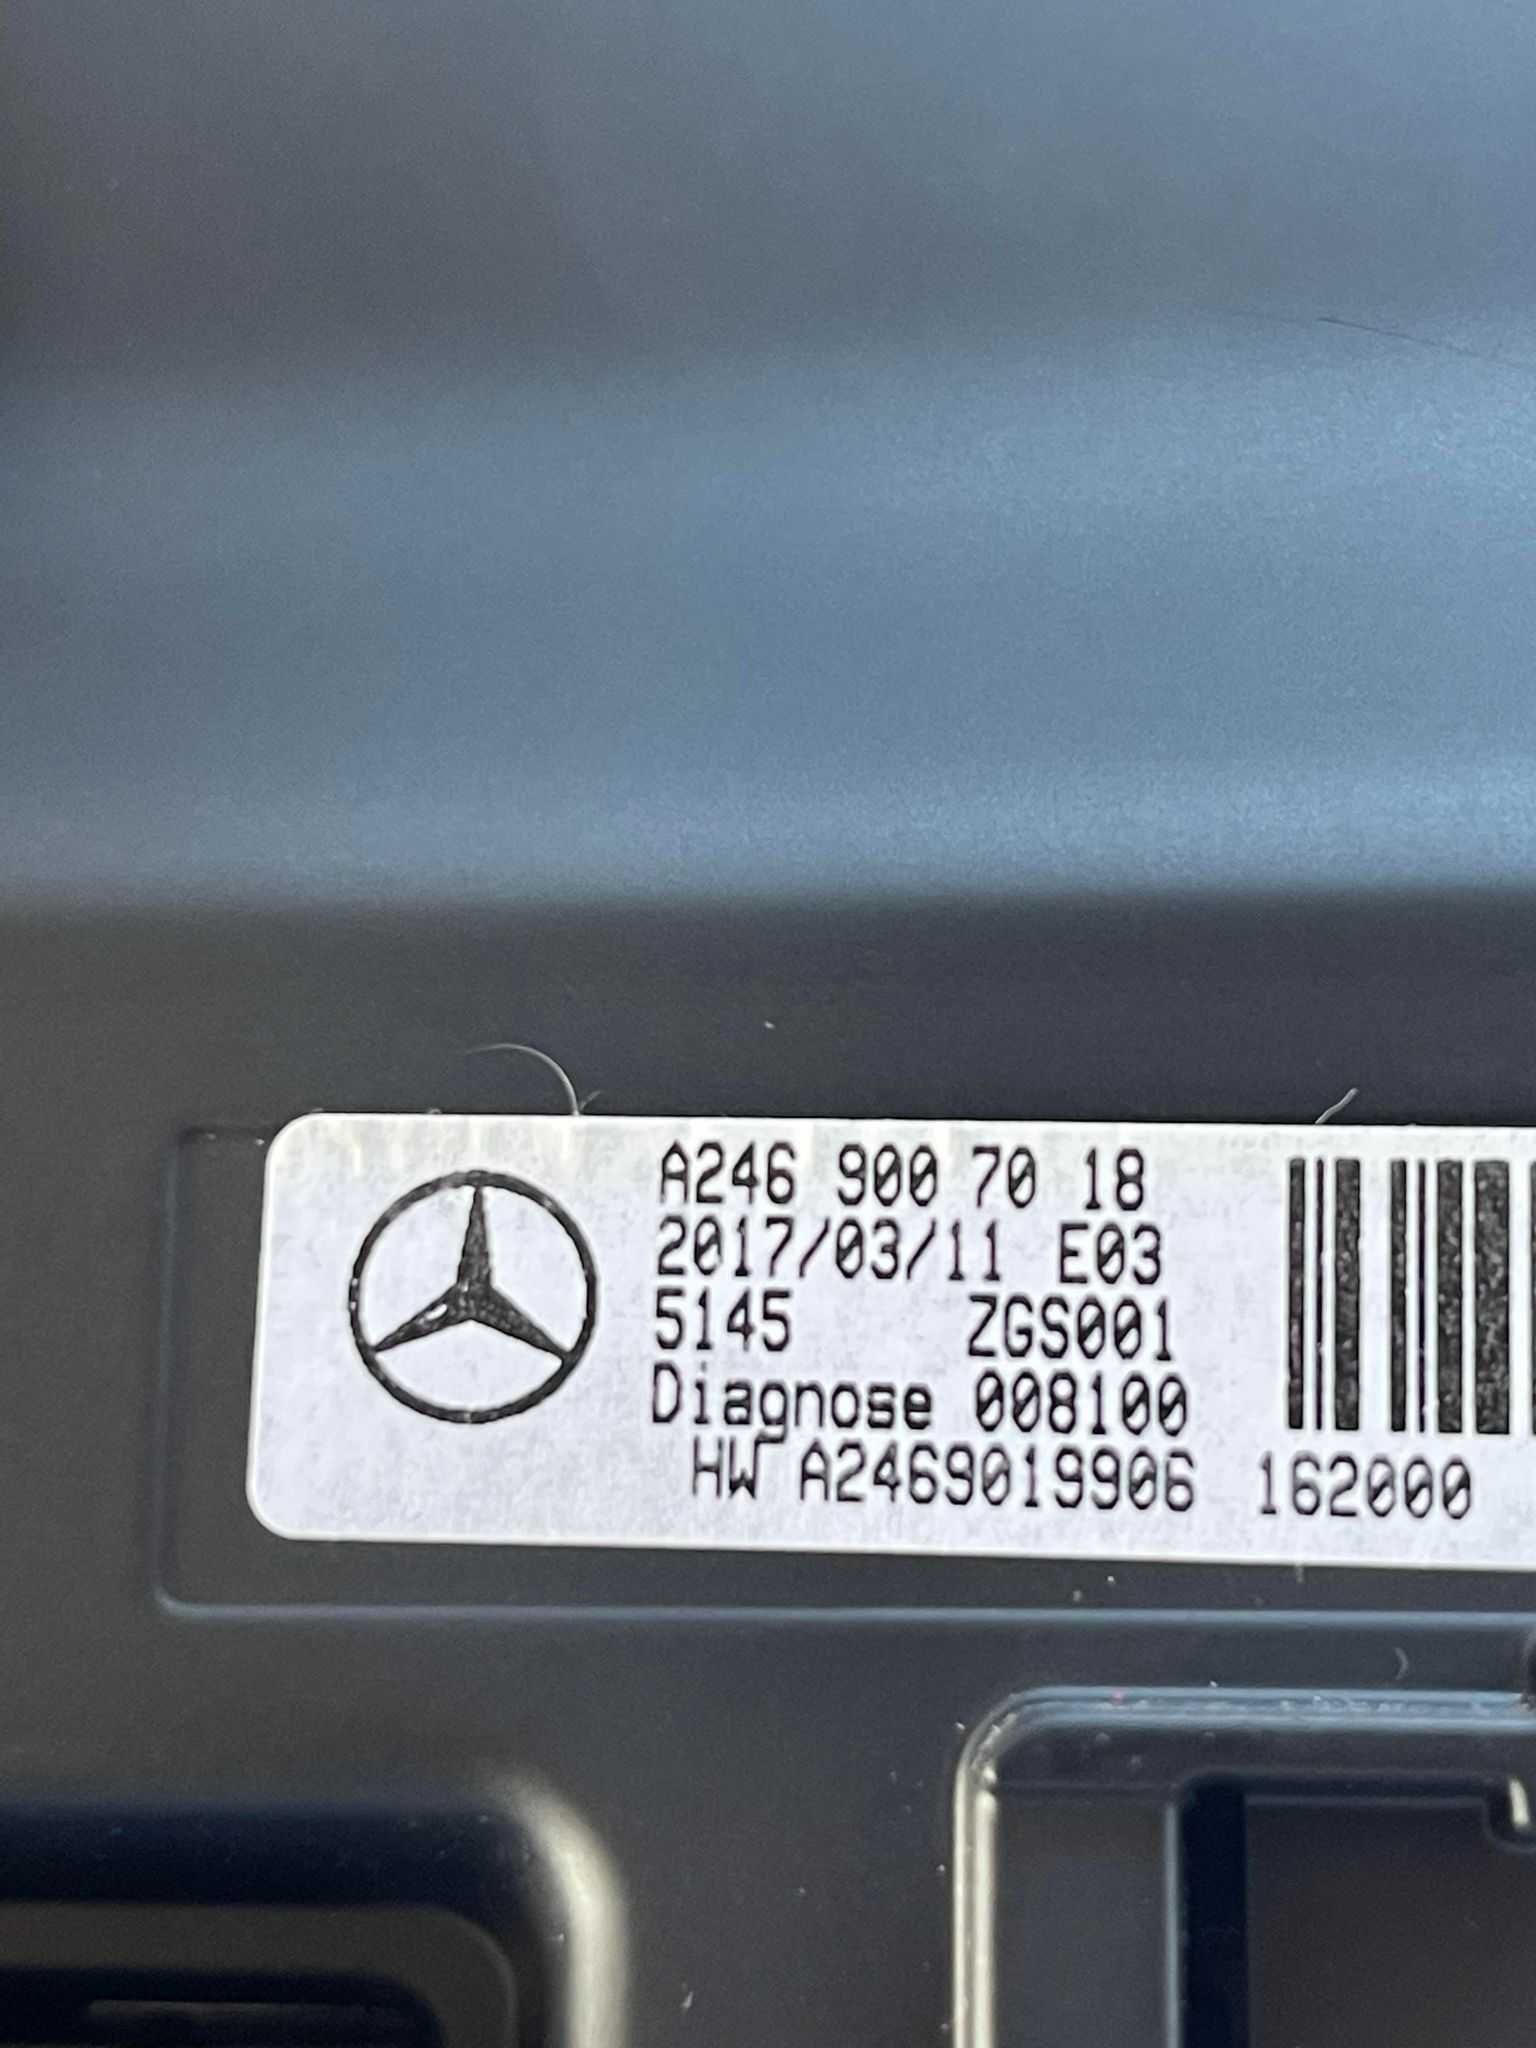 Display Navigatie Mercedes CLA 250, cod A2469019906